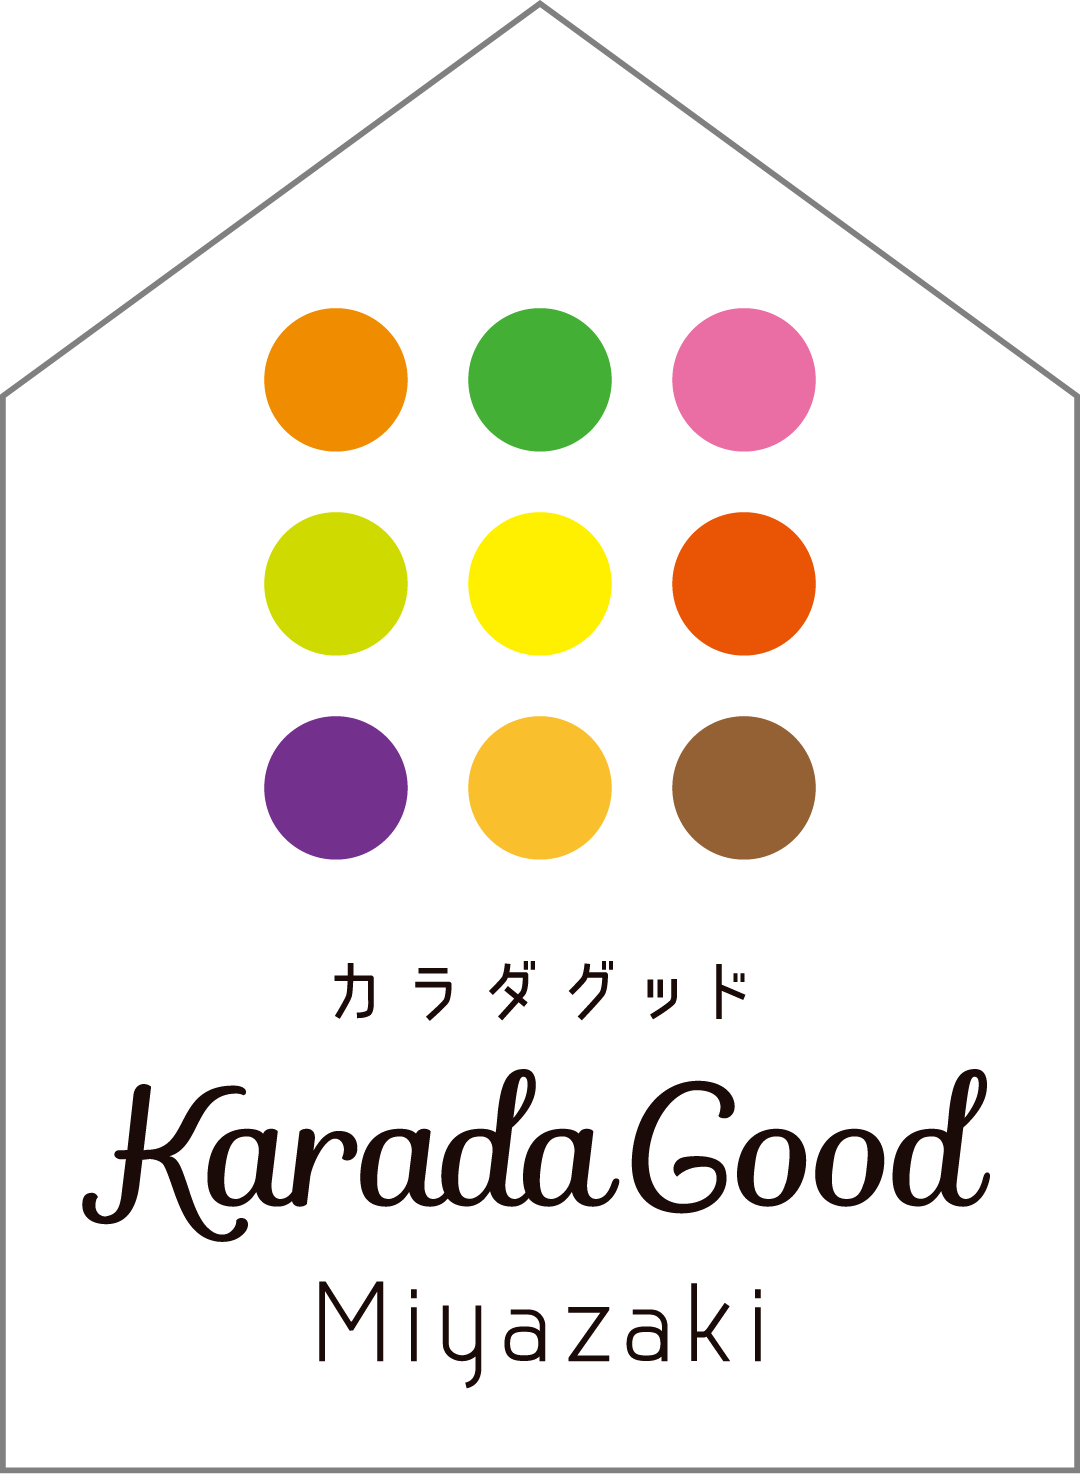 Karada Good Miyazakiのサムネイル画像